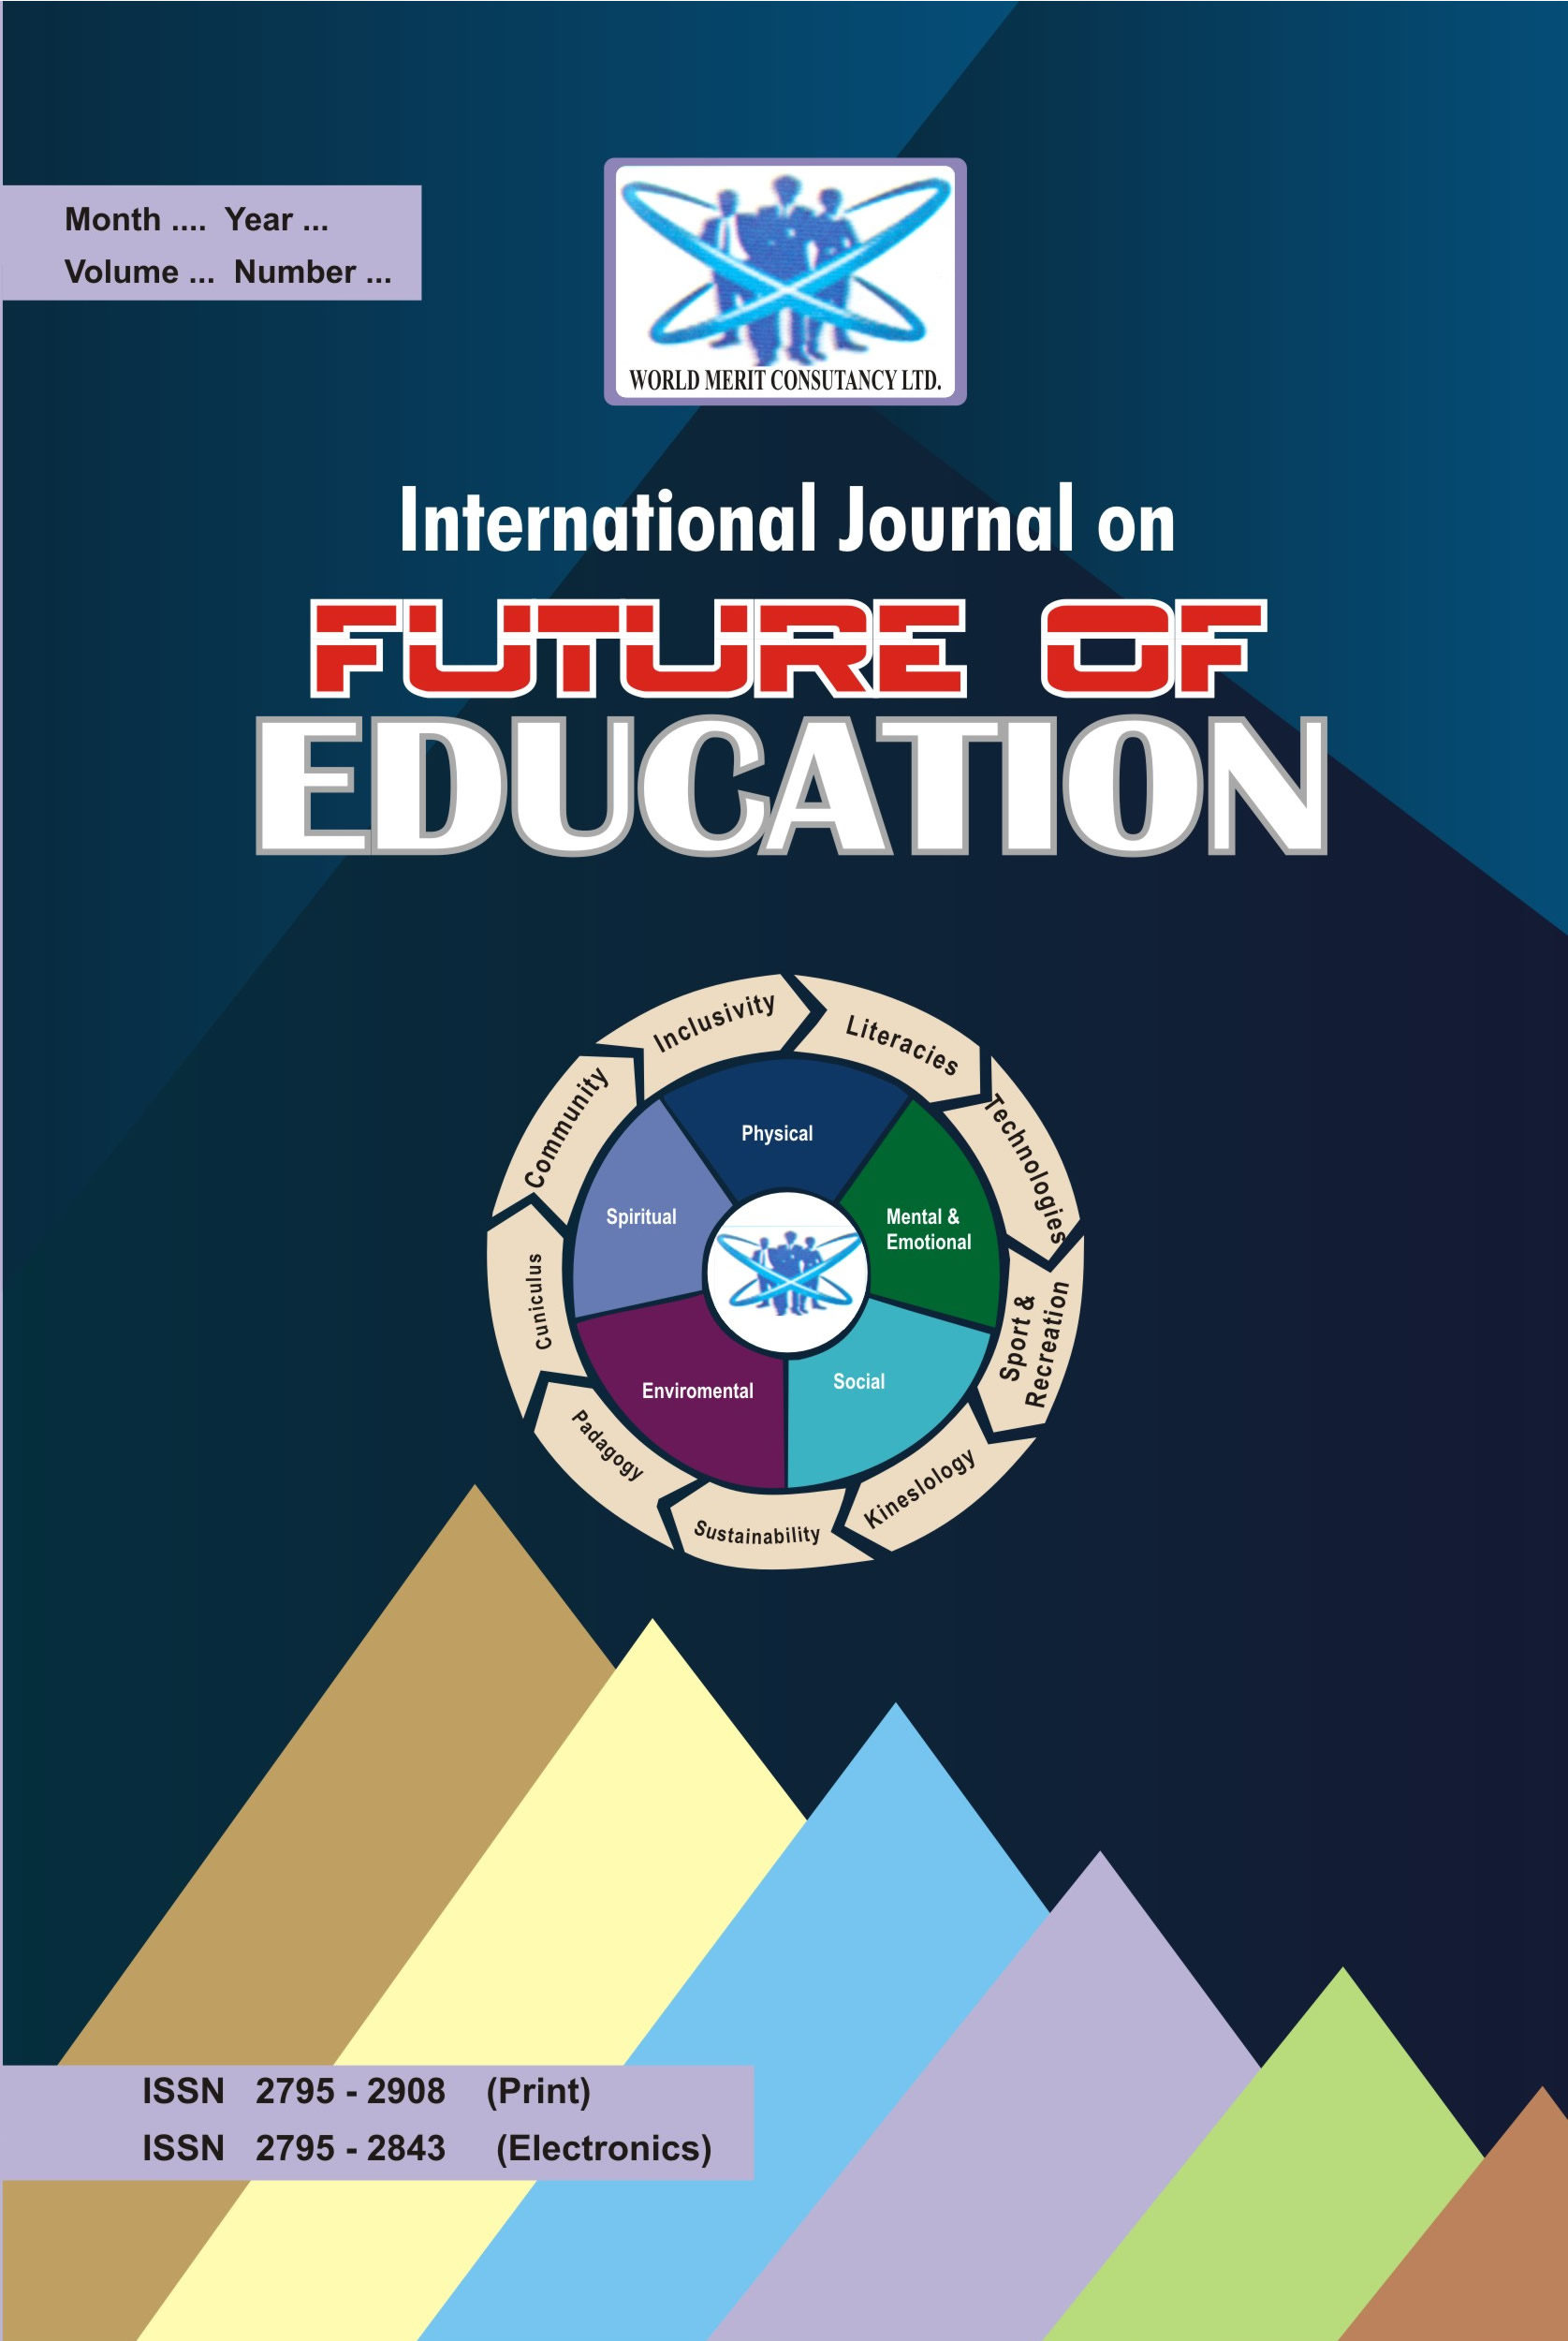 International Journal on Future of Education